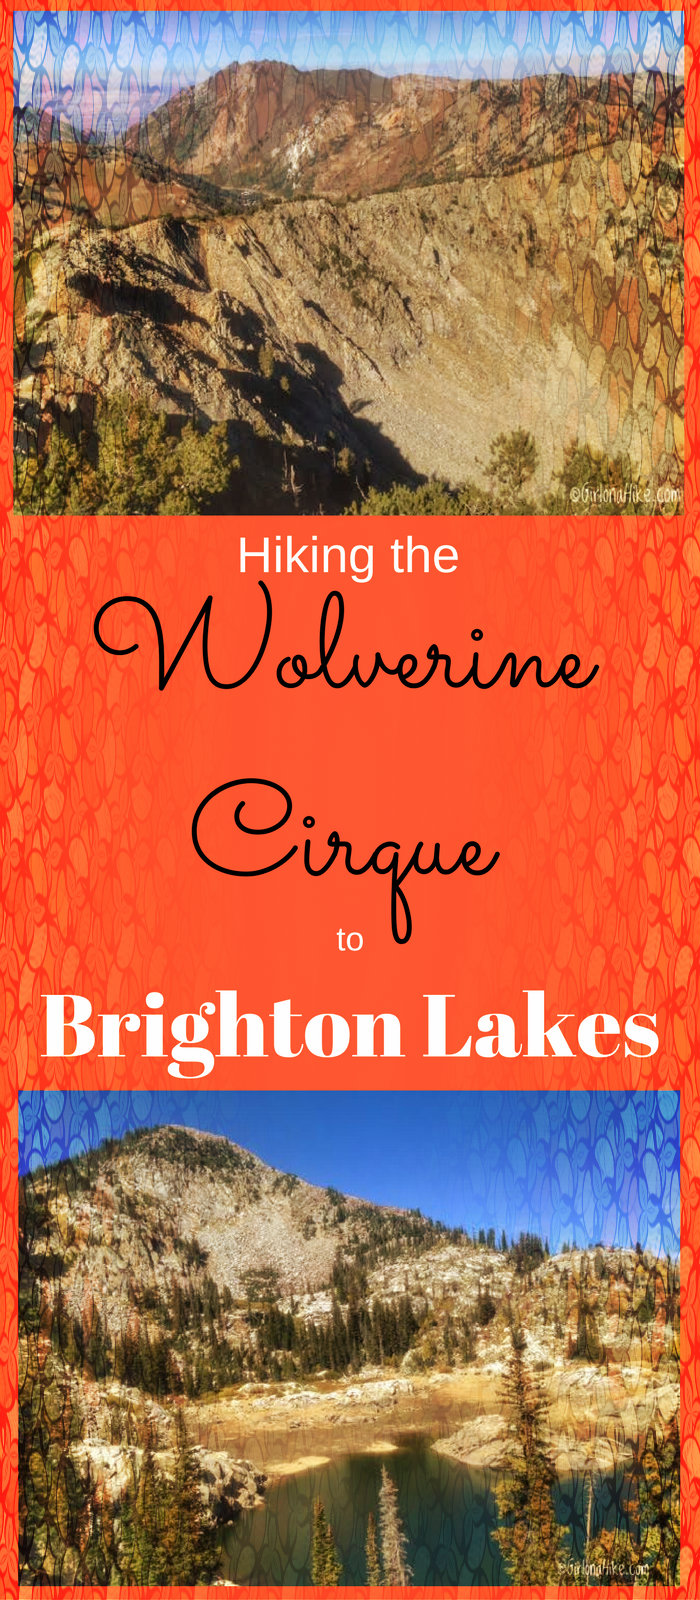 Hiking the Wolverine Cirque to Brighton Lakes (Loop)